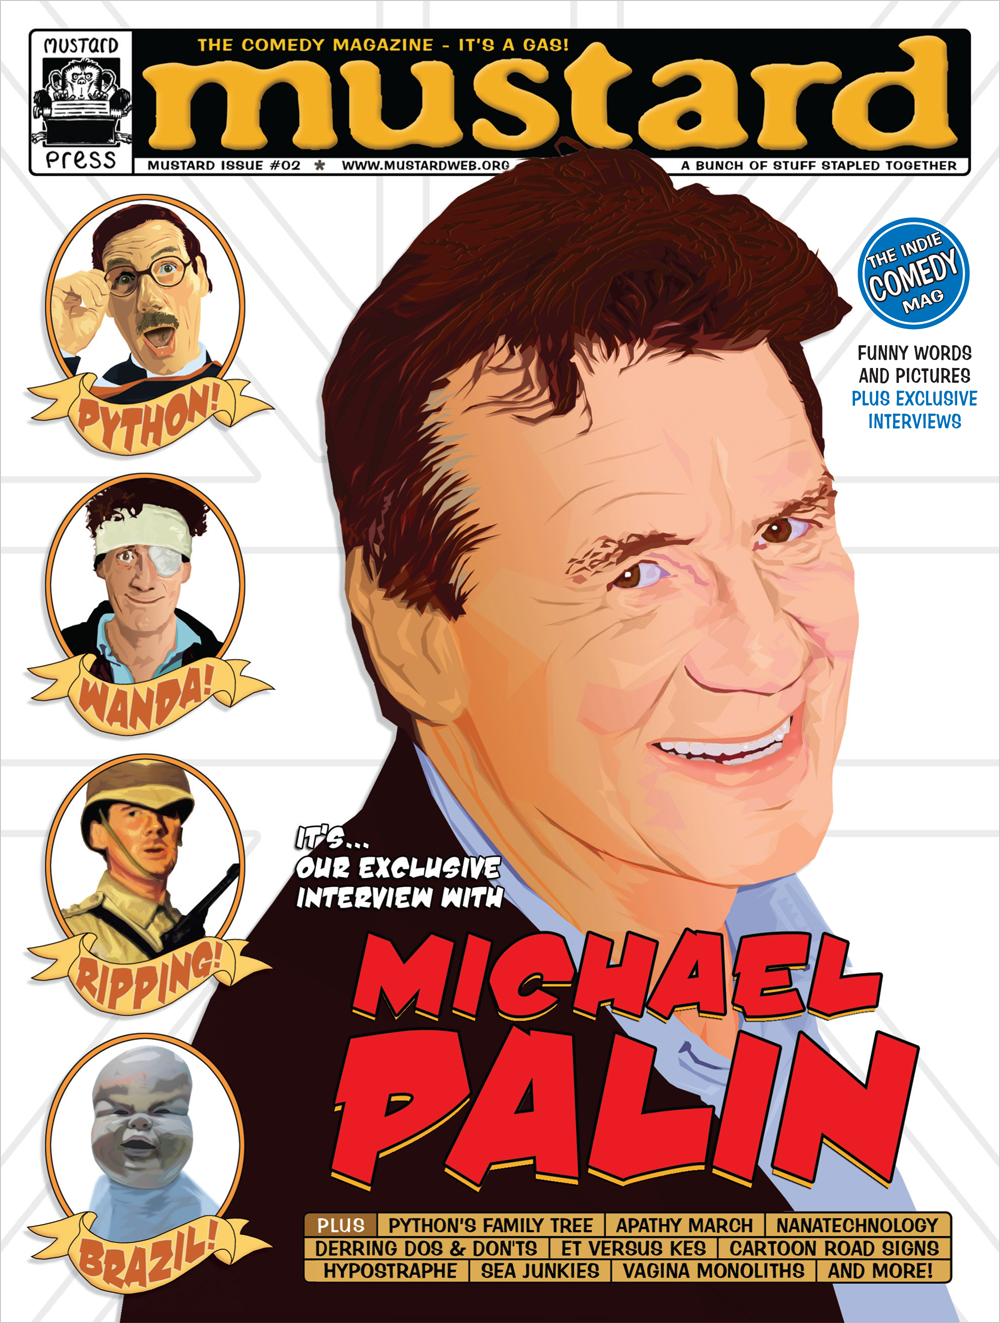 Mustard issue #02, starring Michael Palin